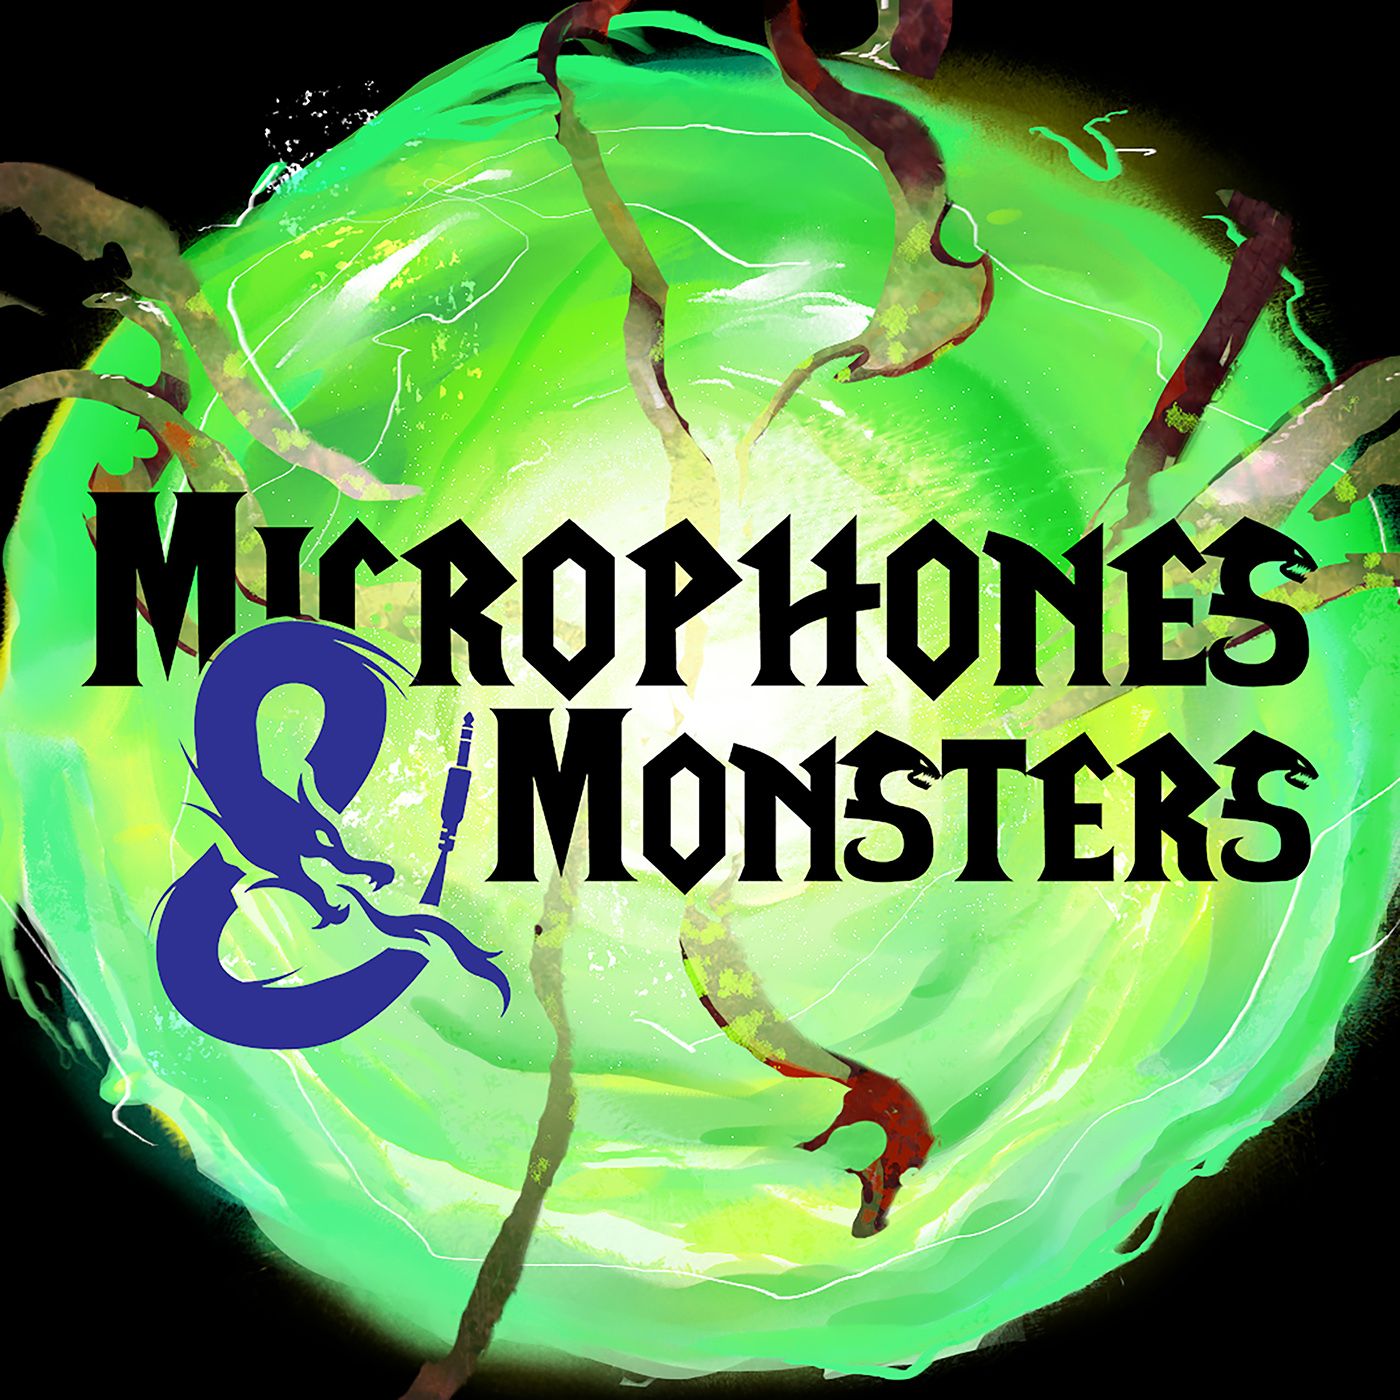 Microphones & Monsters: DnD Lovecraftian Horror